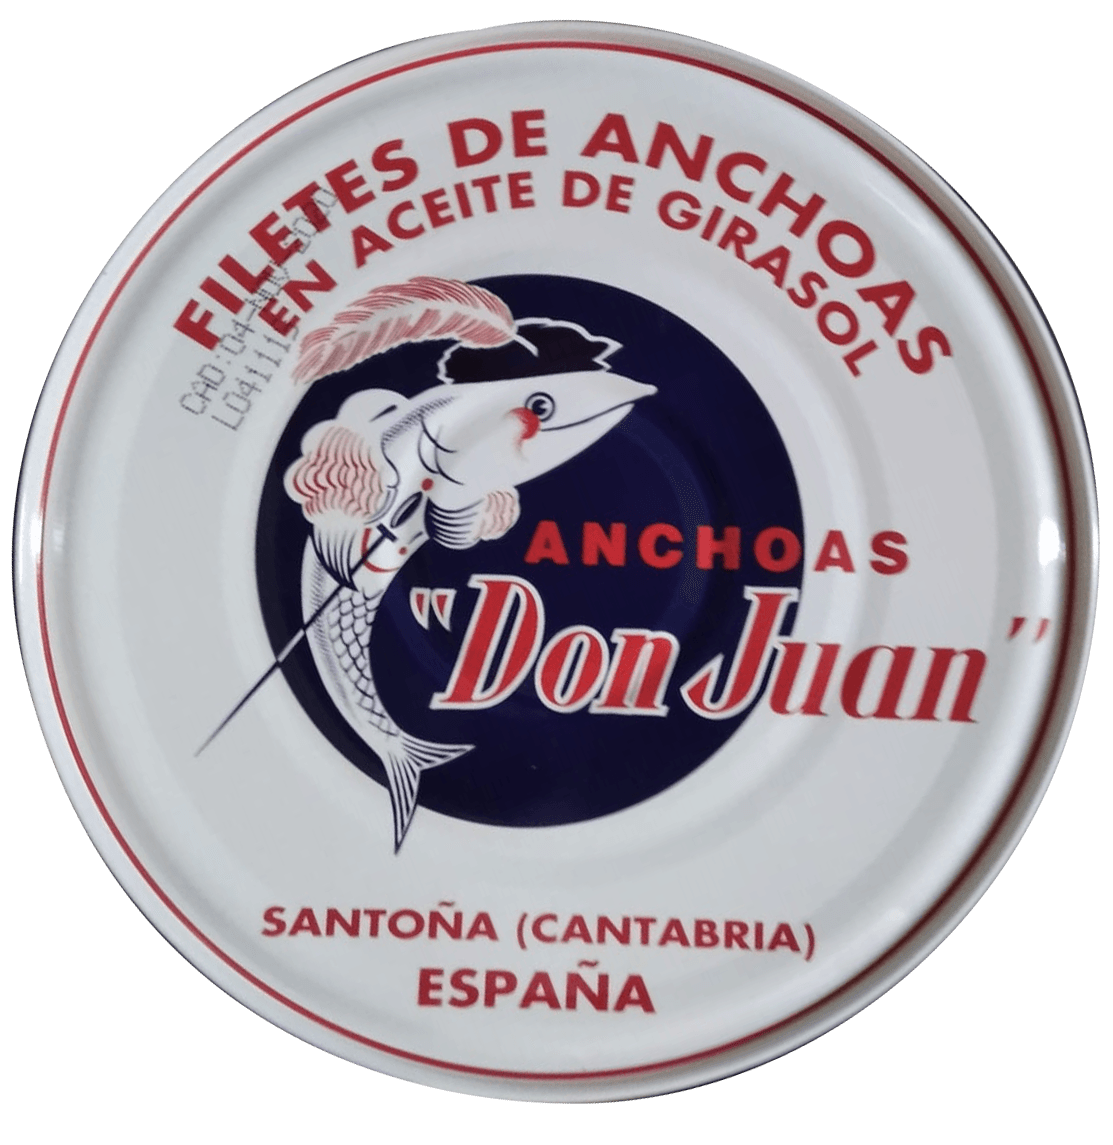 Anchoas de Santoña Don Juan Lata de ro 1000 formato 1 kg Precio sin IVA 14,95€